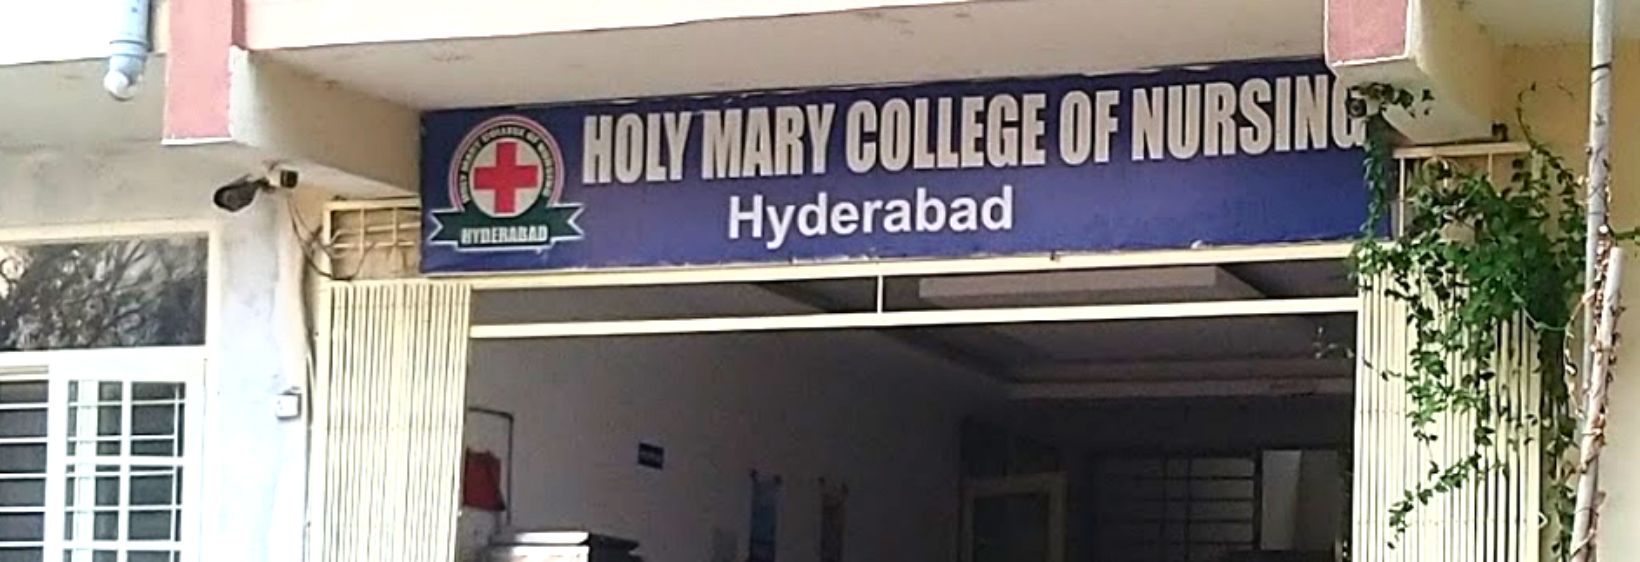 Holy Mary College of Nursing - Hyderabad